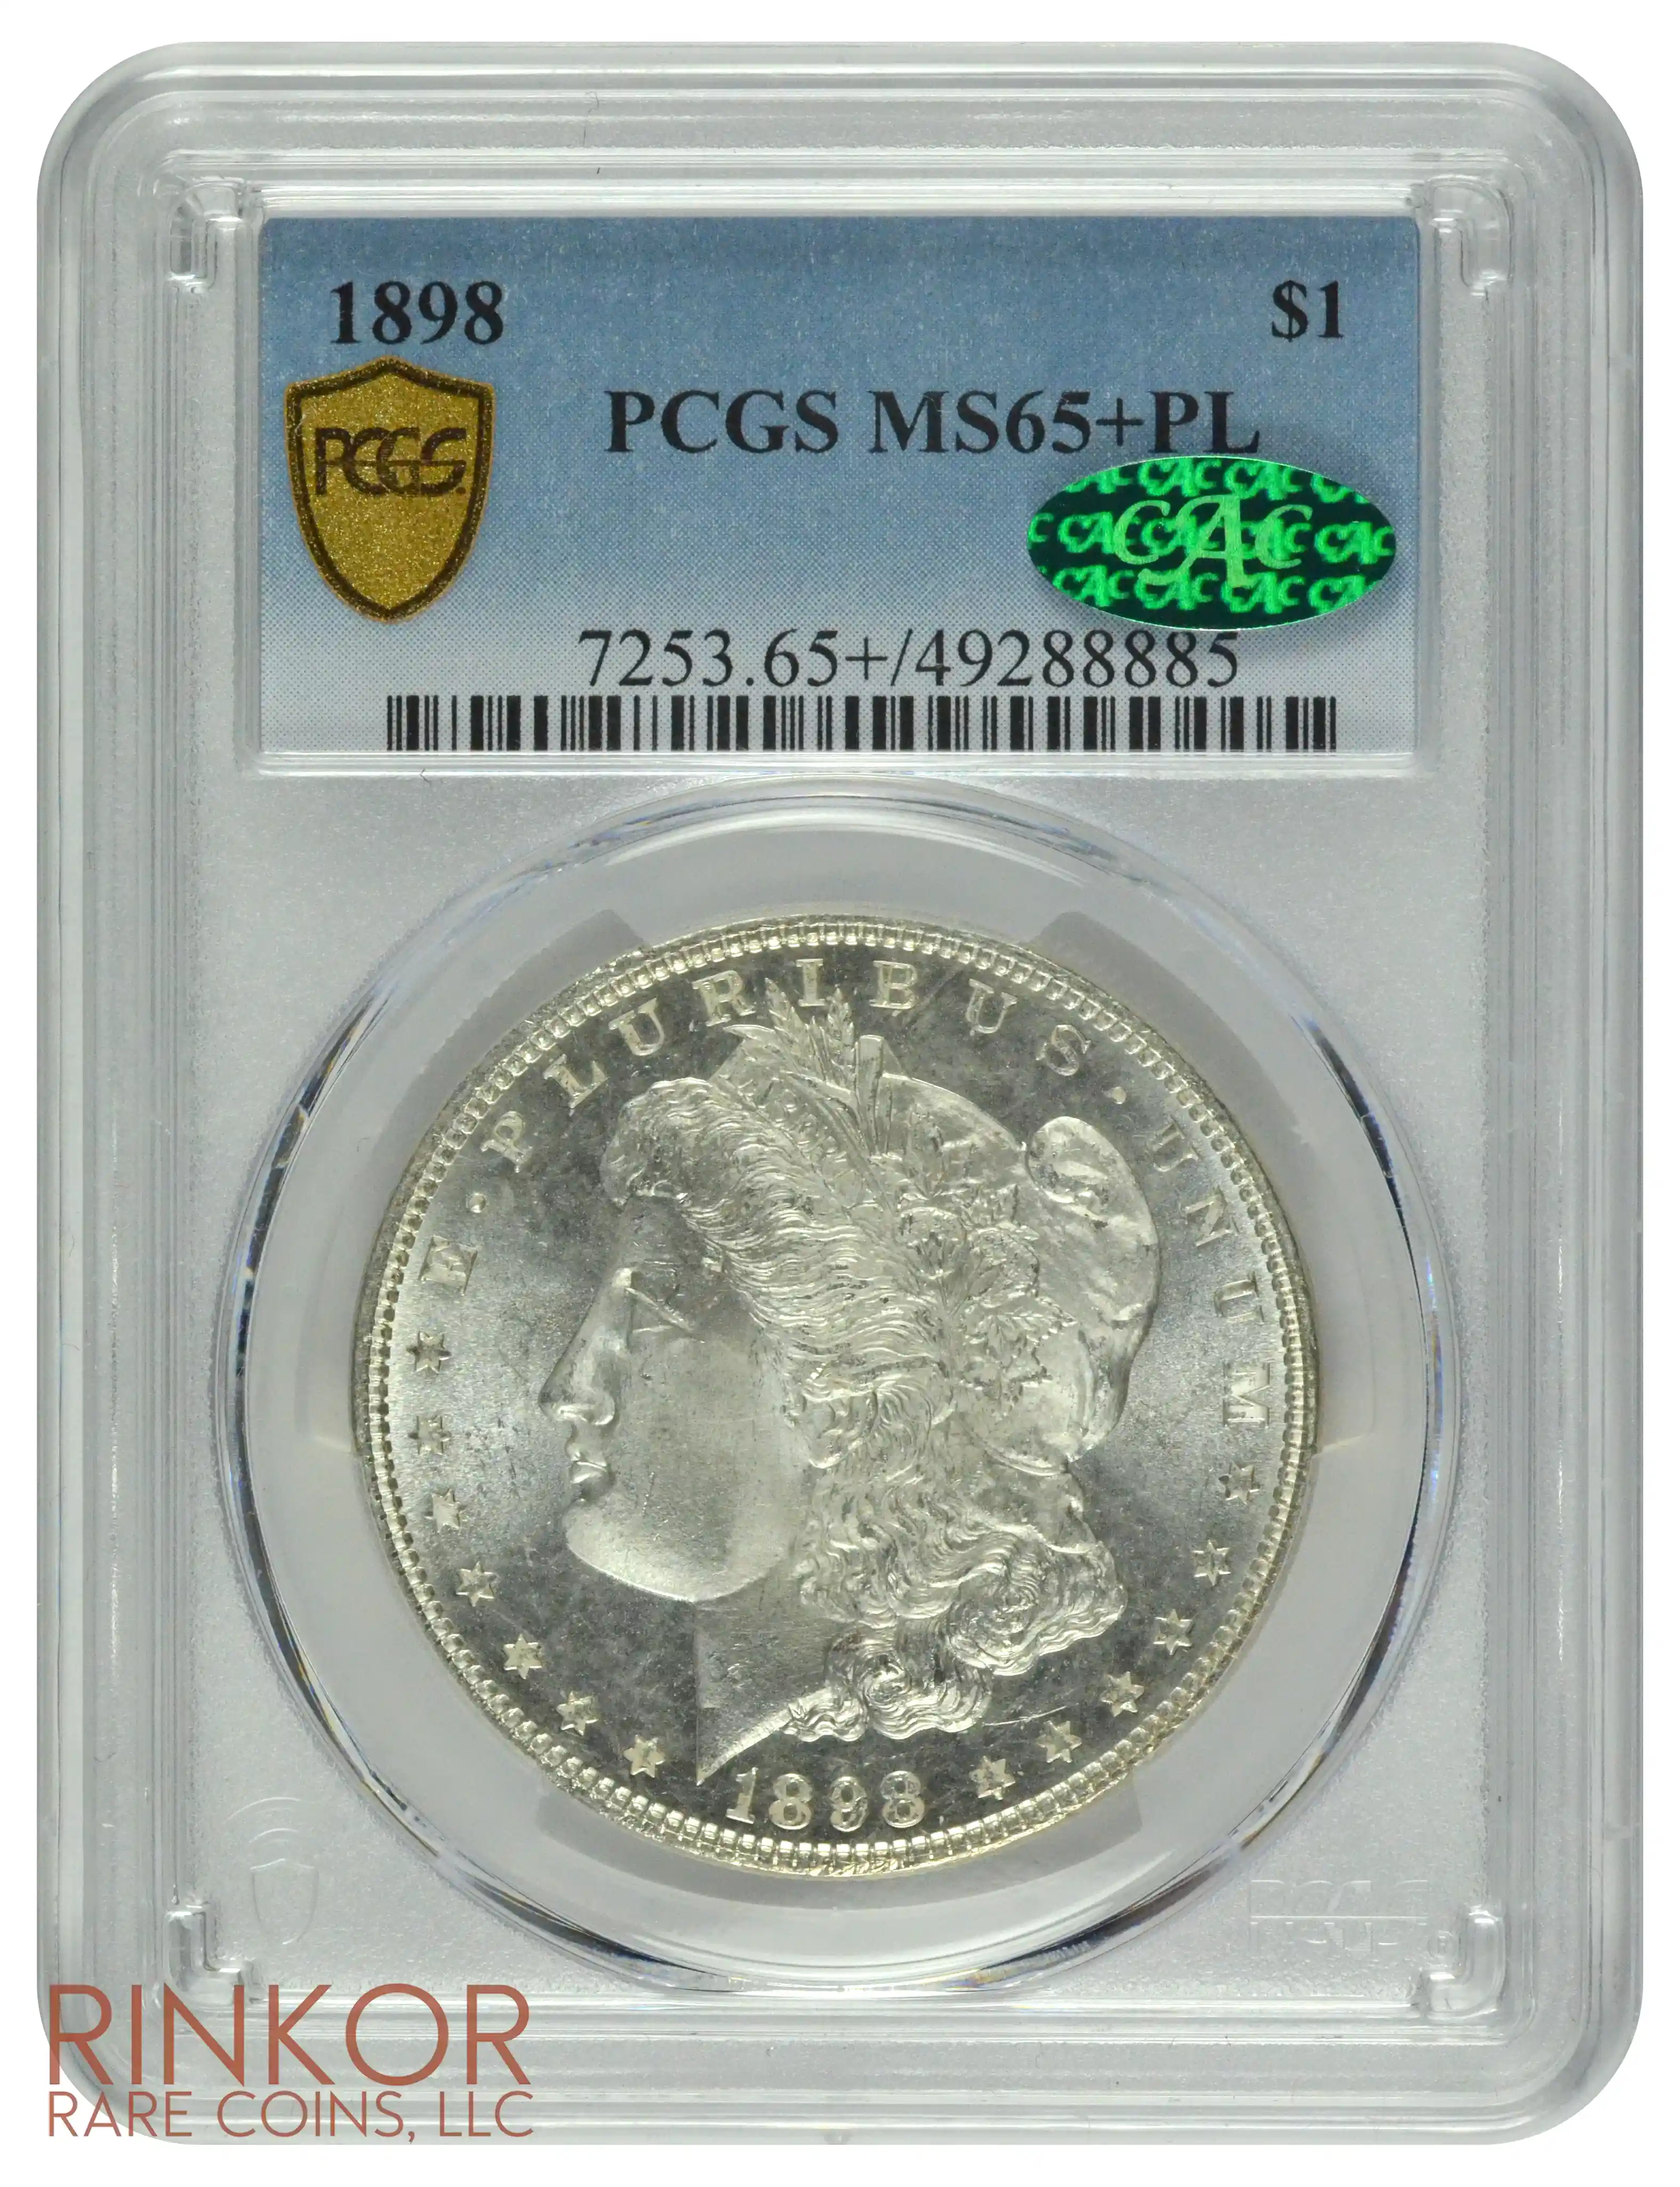 1898 $1 PCGS MS 65+ PL CAC